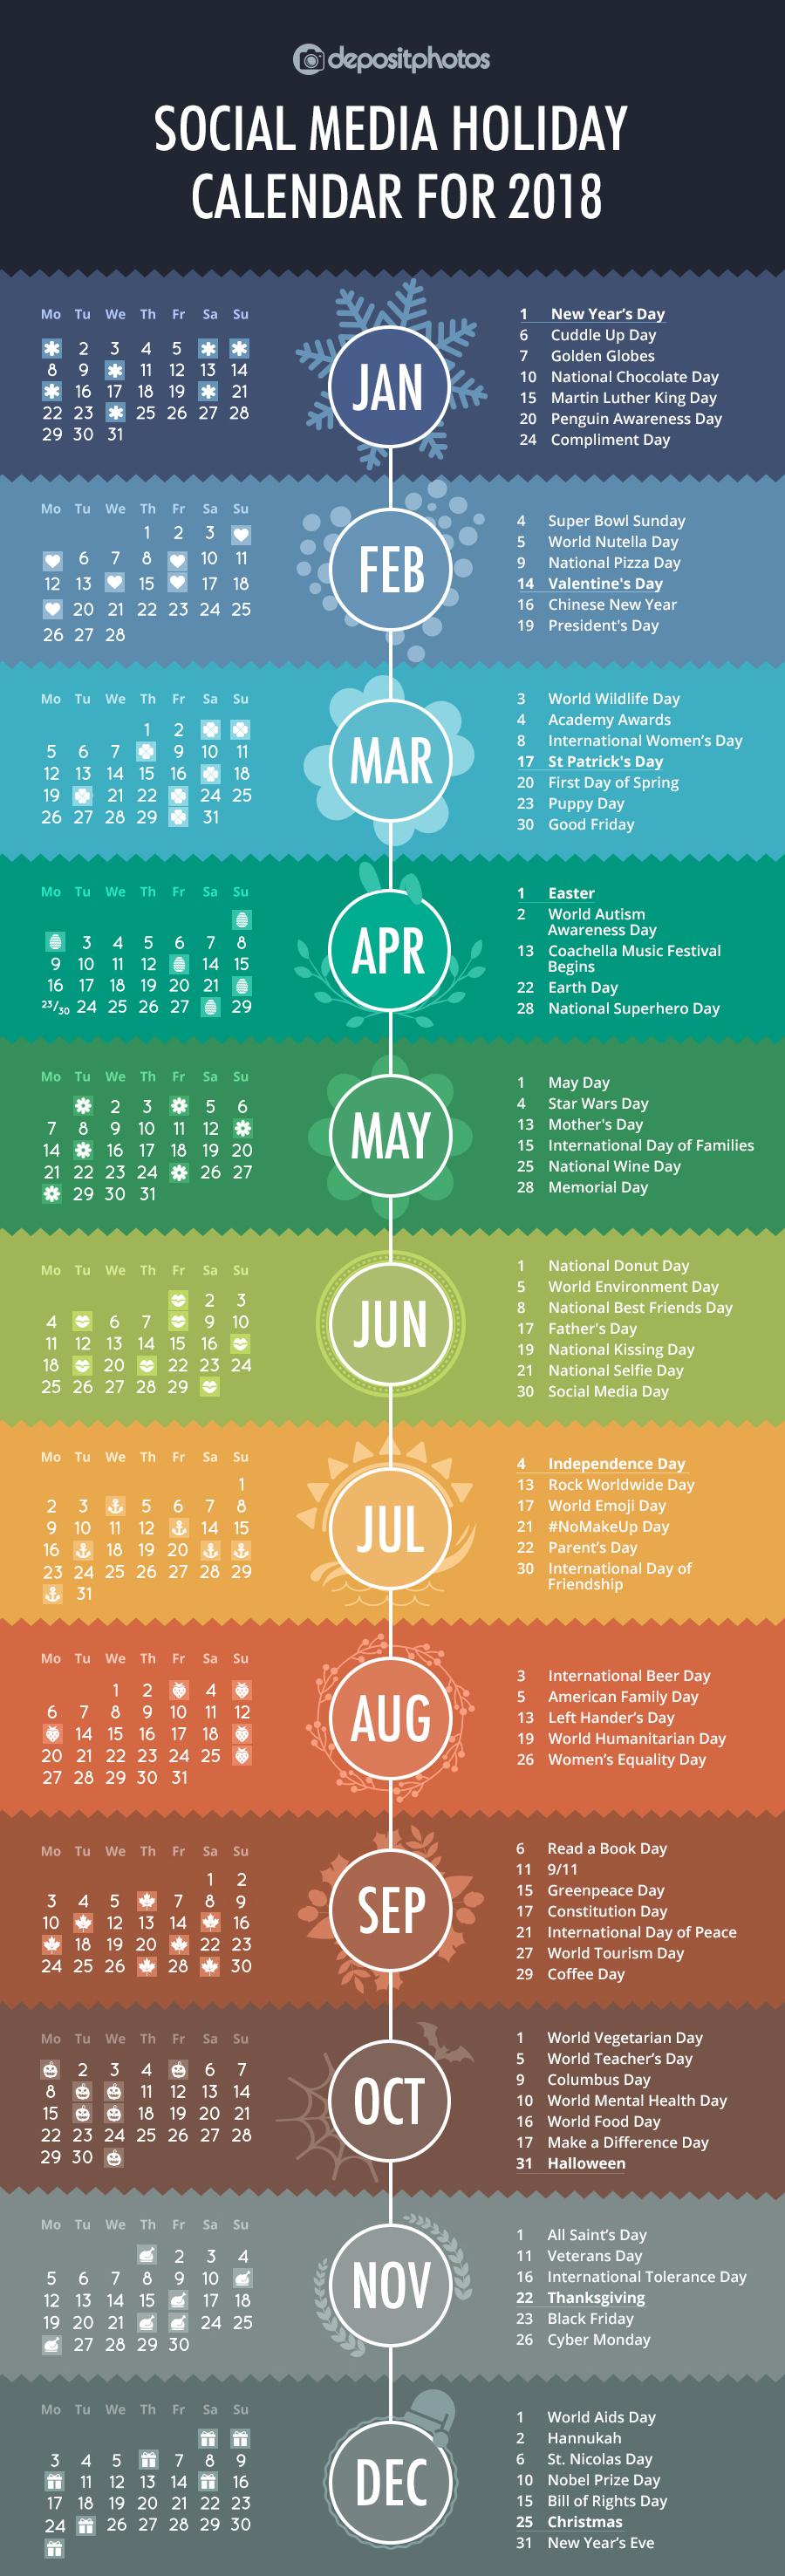 Social Media Holiday Calendar For 2018 (Infographic)